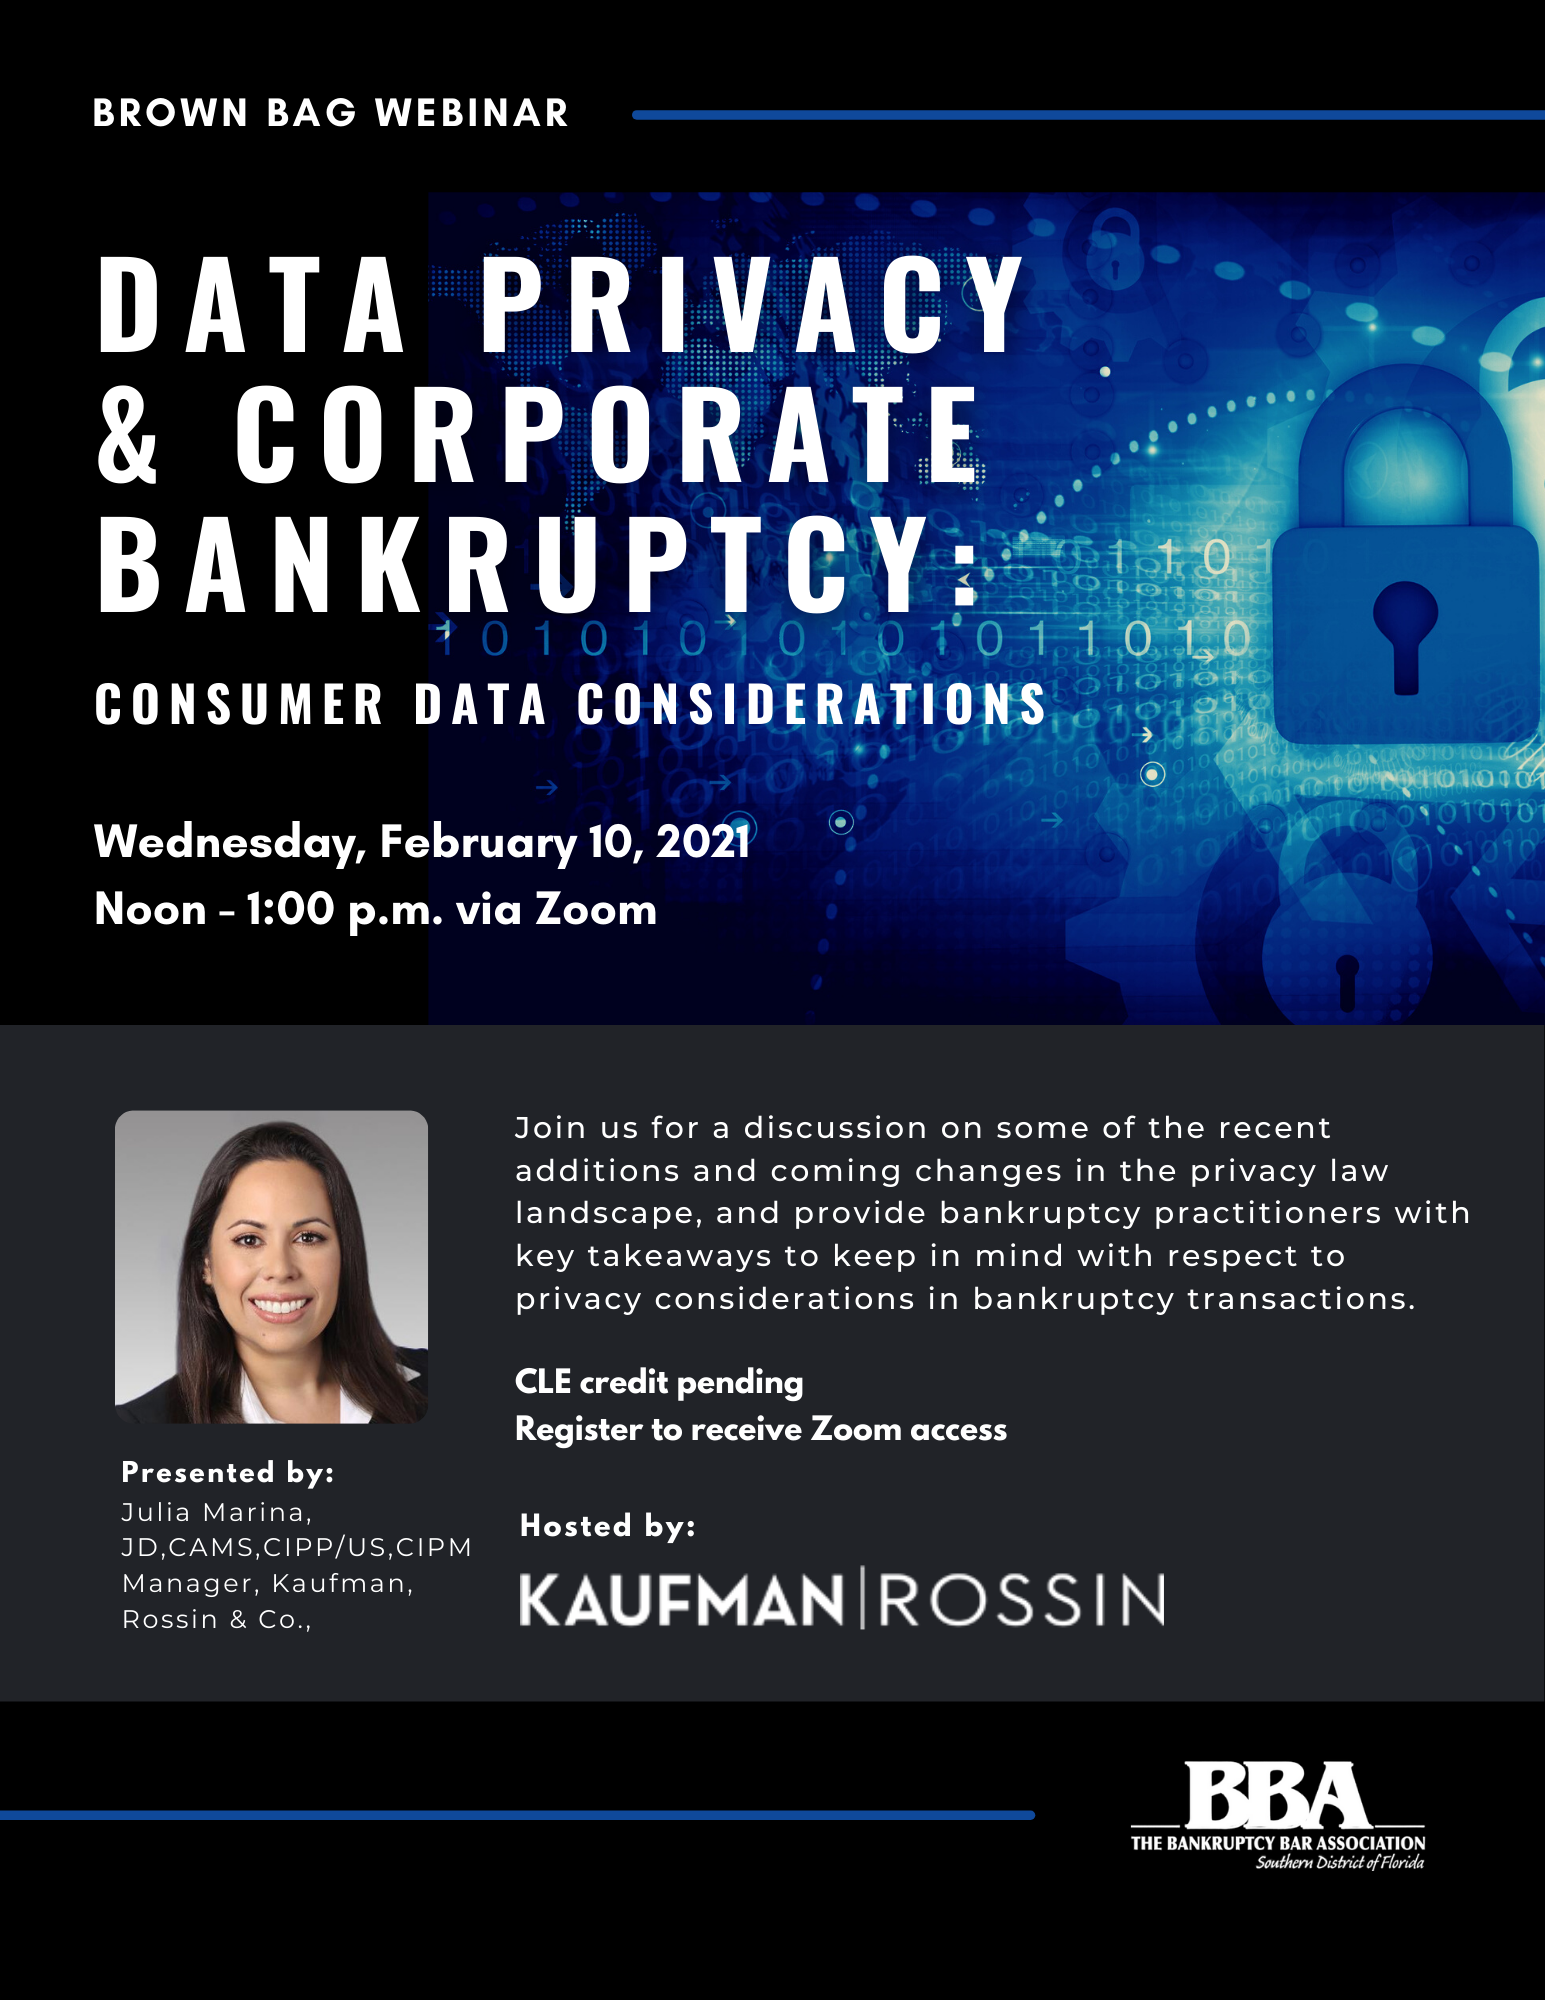 Brown Bag Webinar - Data Privacy & Corporate Bankruptcy: Consumer Data Considerations